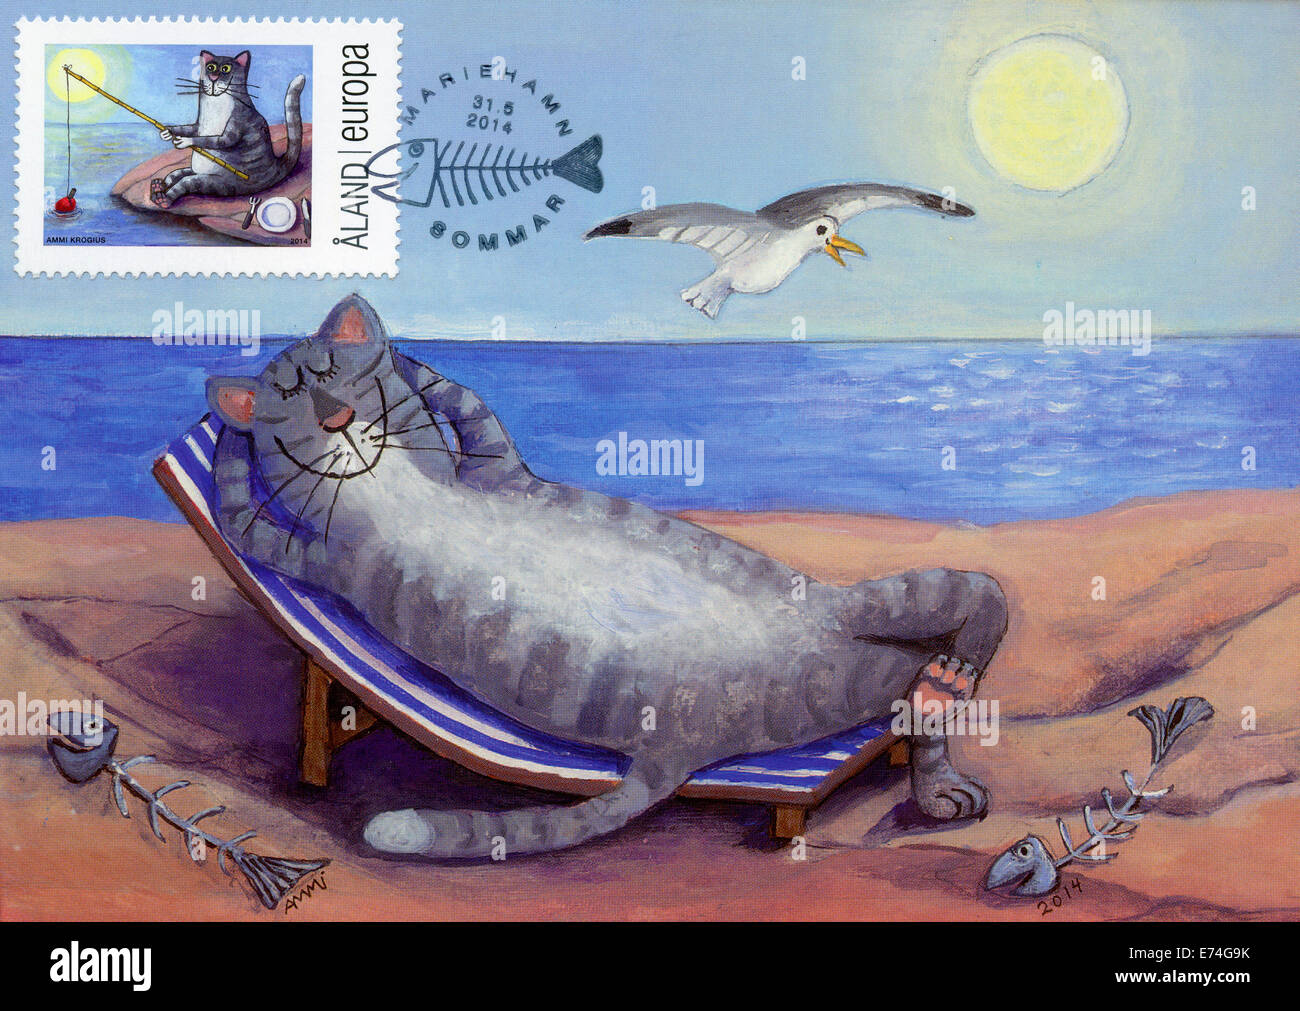 Aland Maximum Karte mit Katze illustration Stockfoto